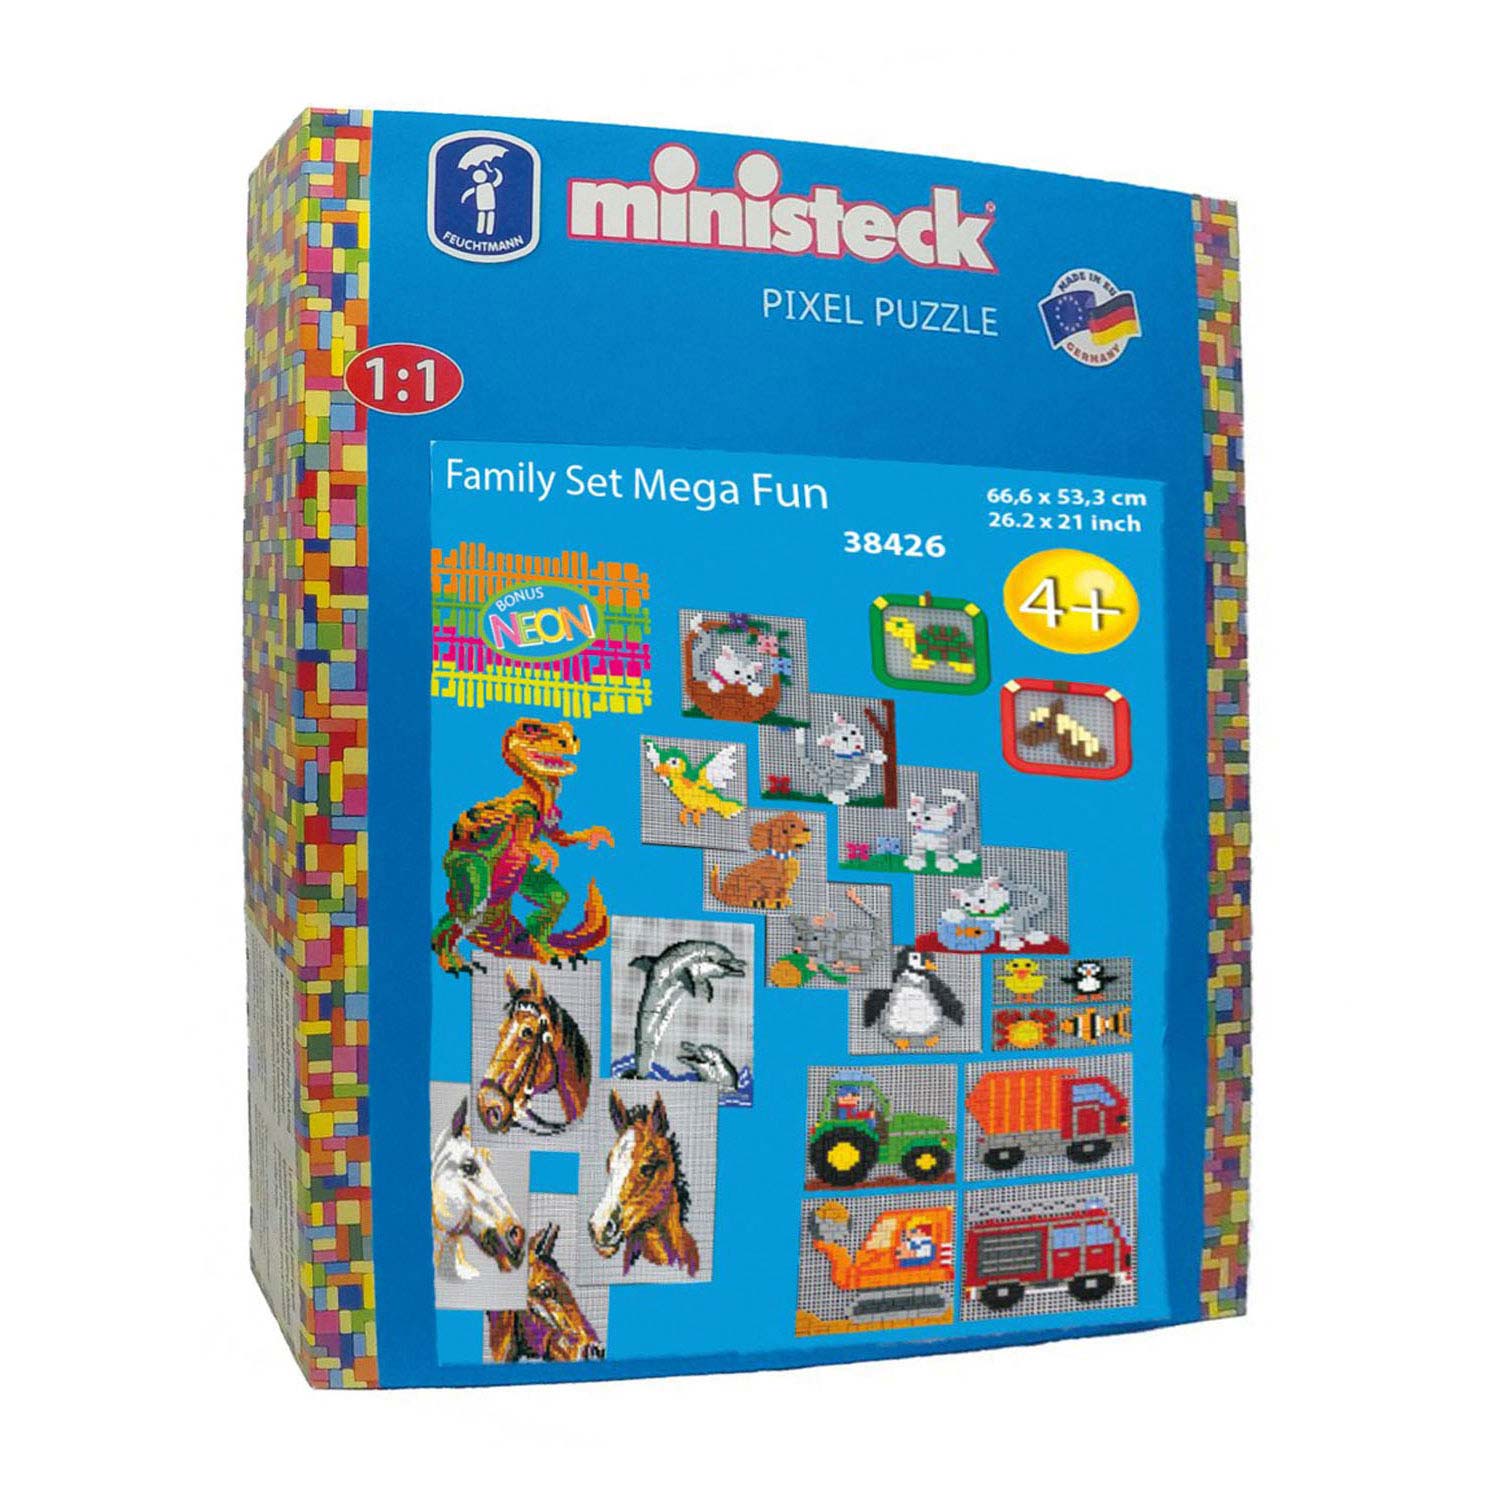 Atticus domesticeren controleren Ministeck Family Set Mega Fun - XXL Box, 4000pcs. | Thimble Toys